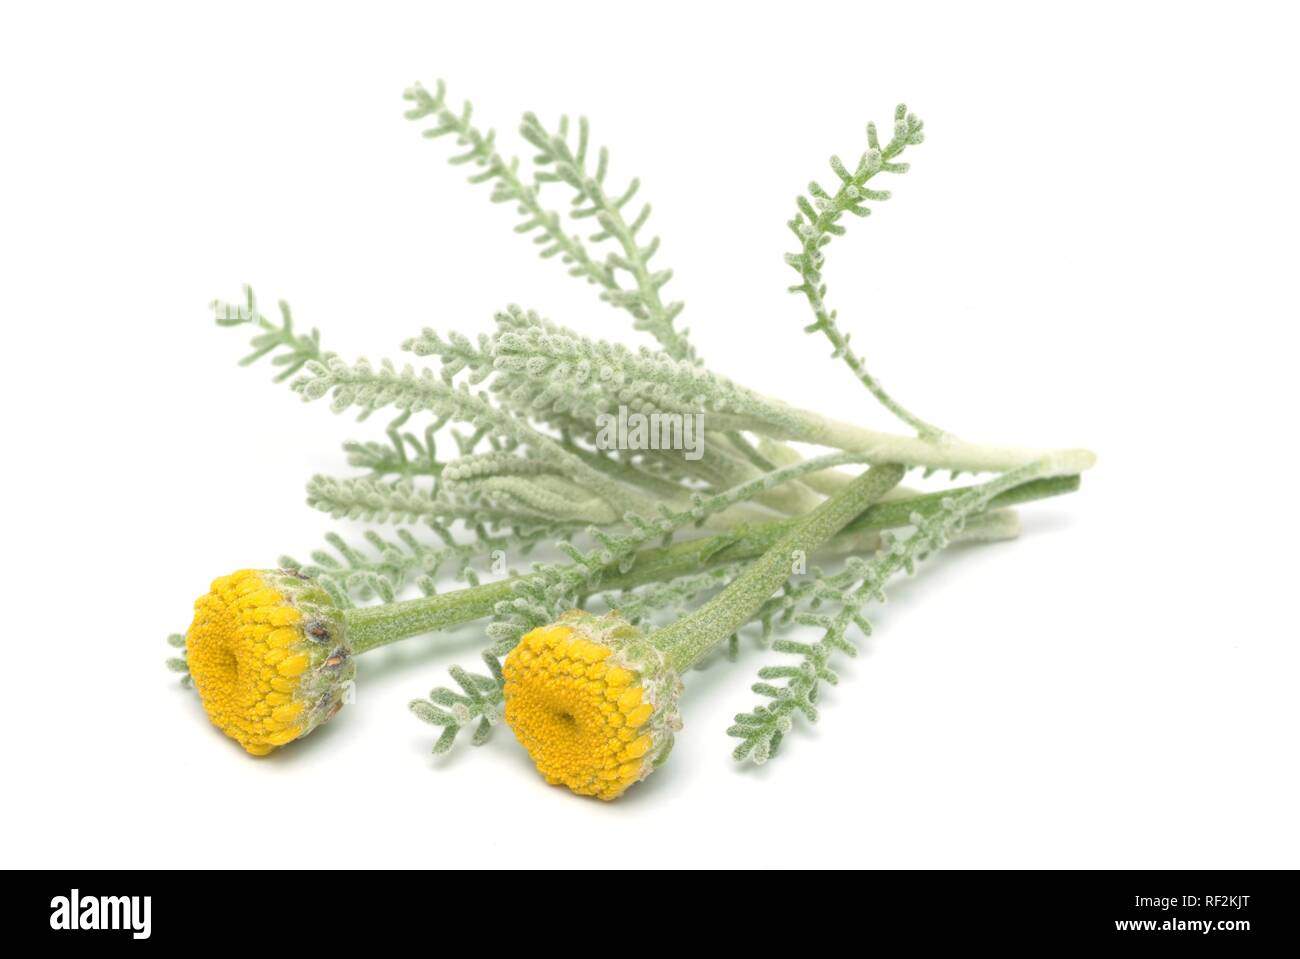 Cotton Lavender or Gray Santolina (Santolina chamaecyparissus), medicinal plant Stock Photo